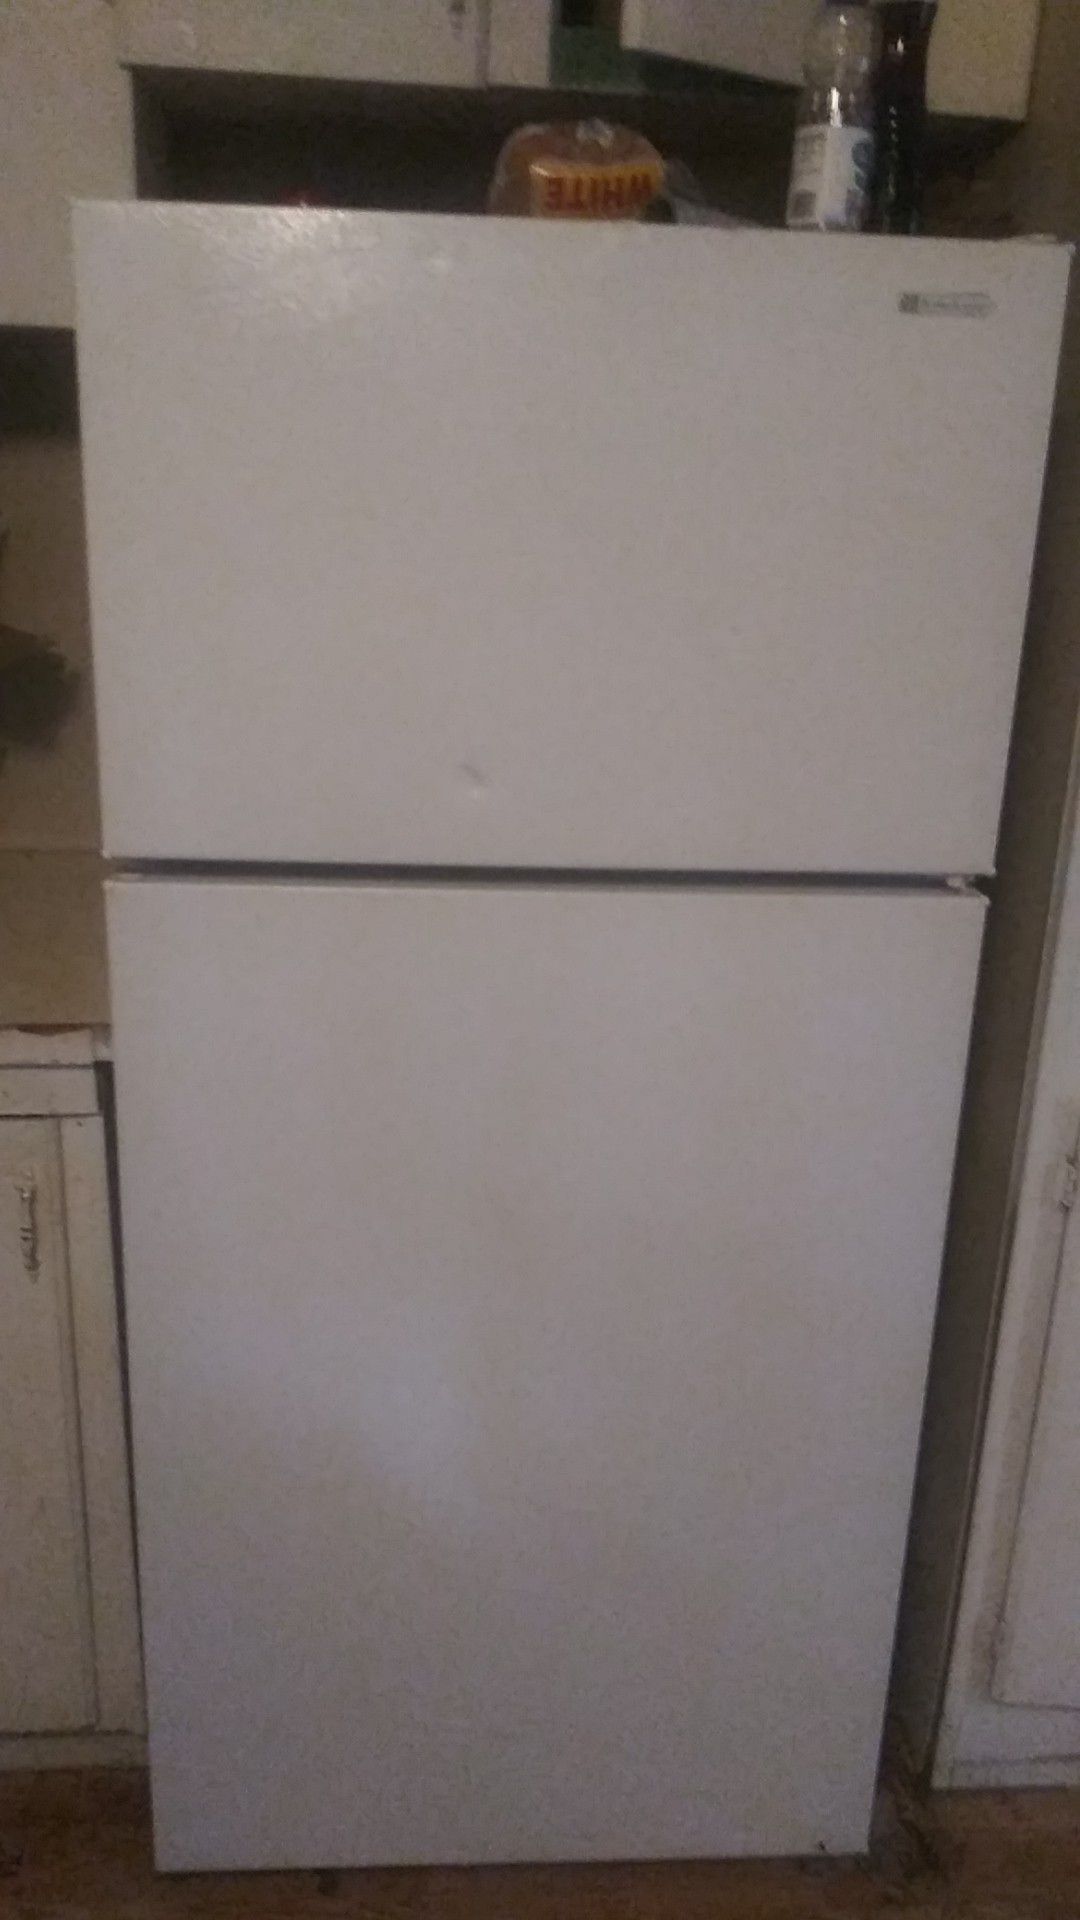 Americana refrigerator